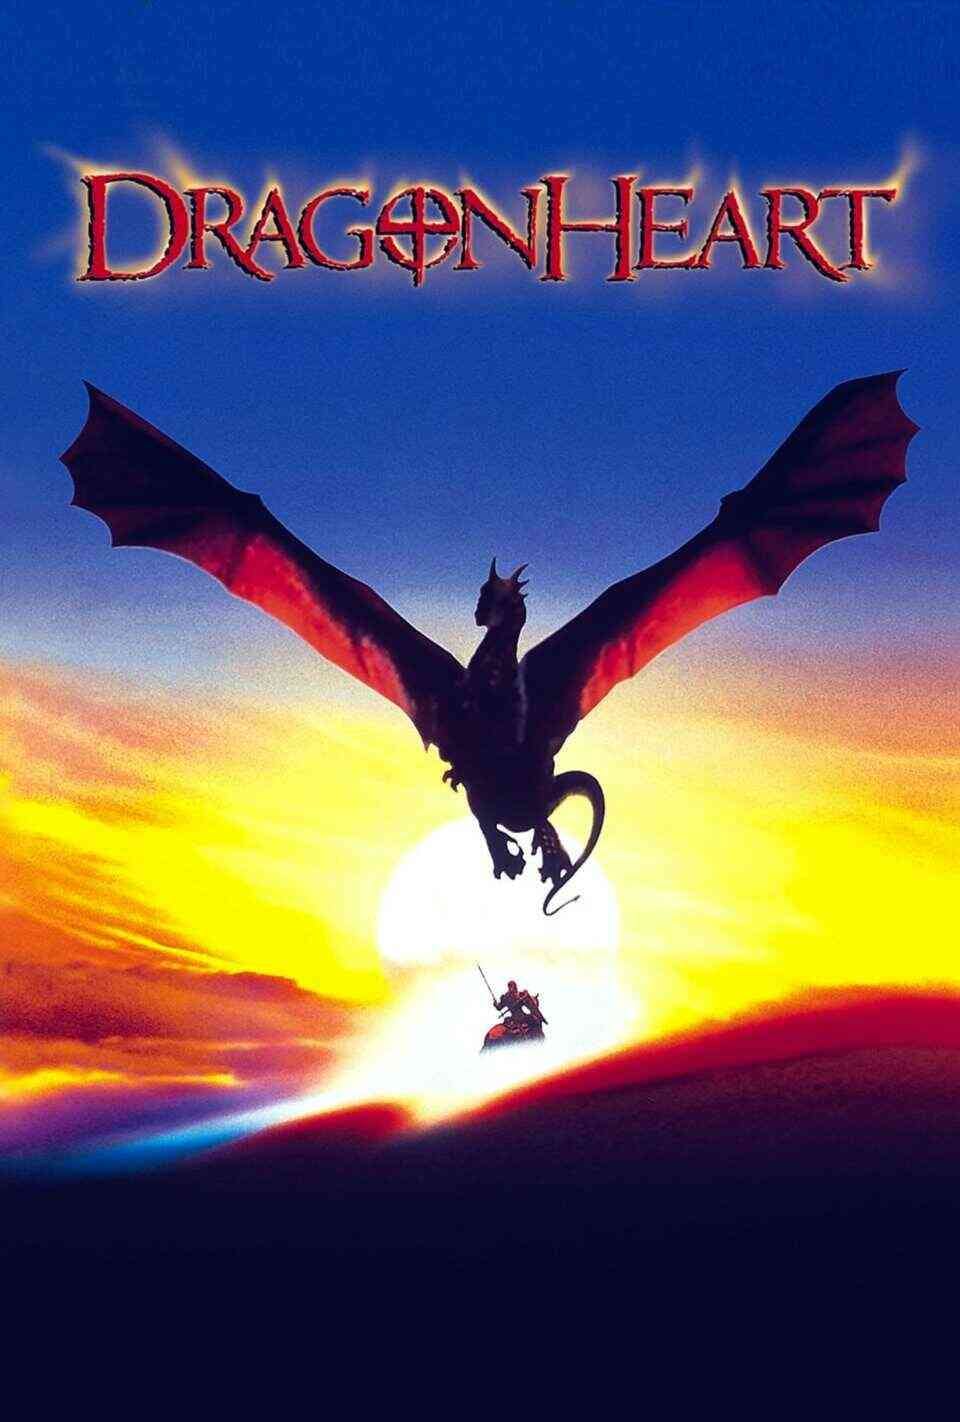 Read Dragonheart screenplay.